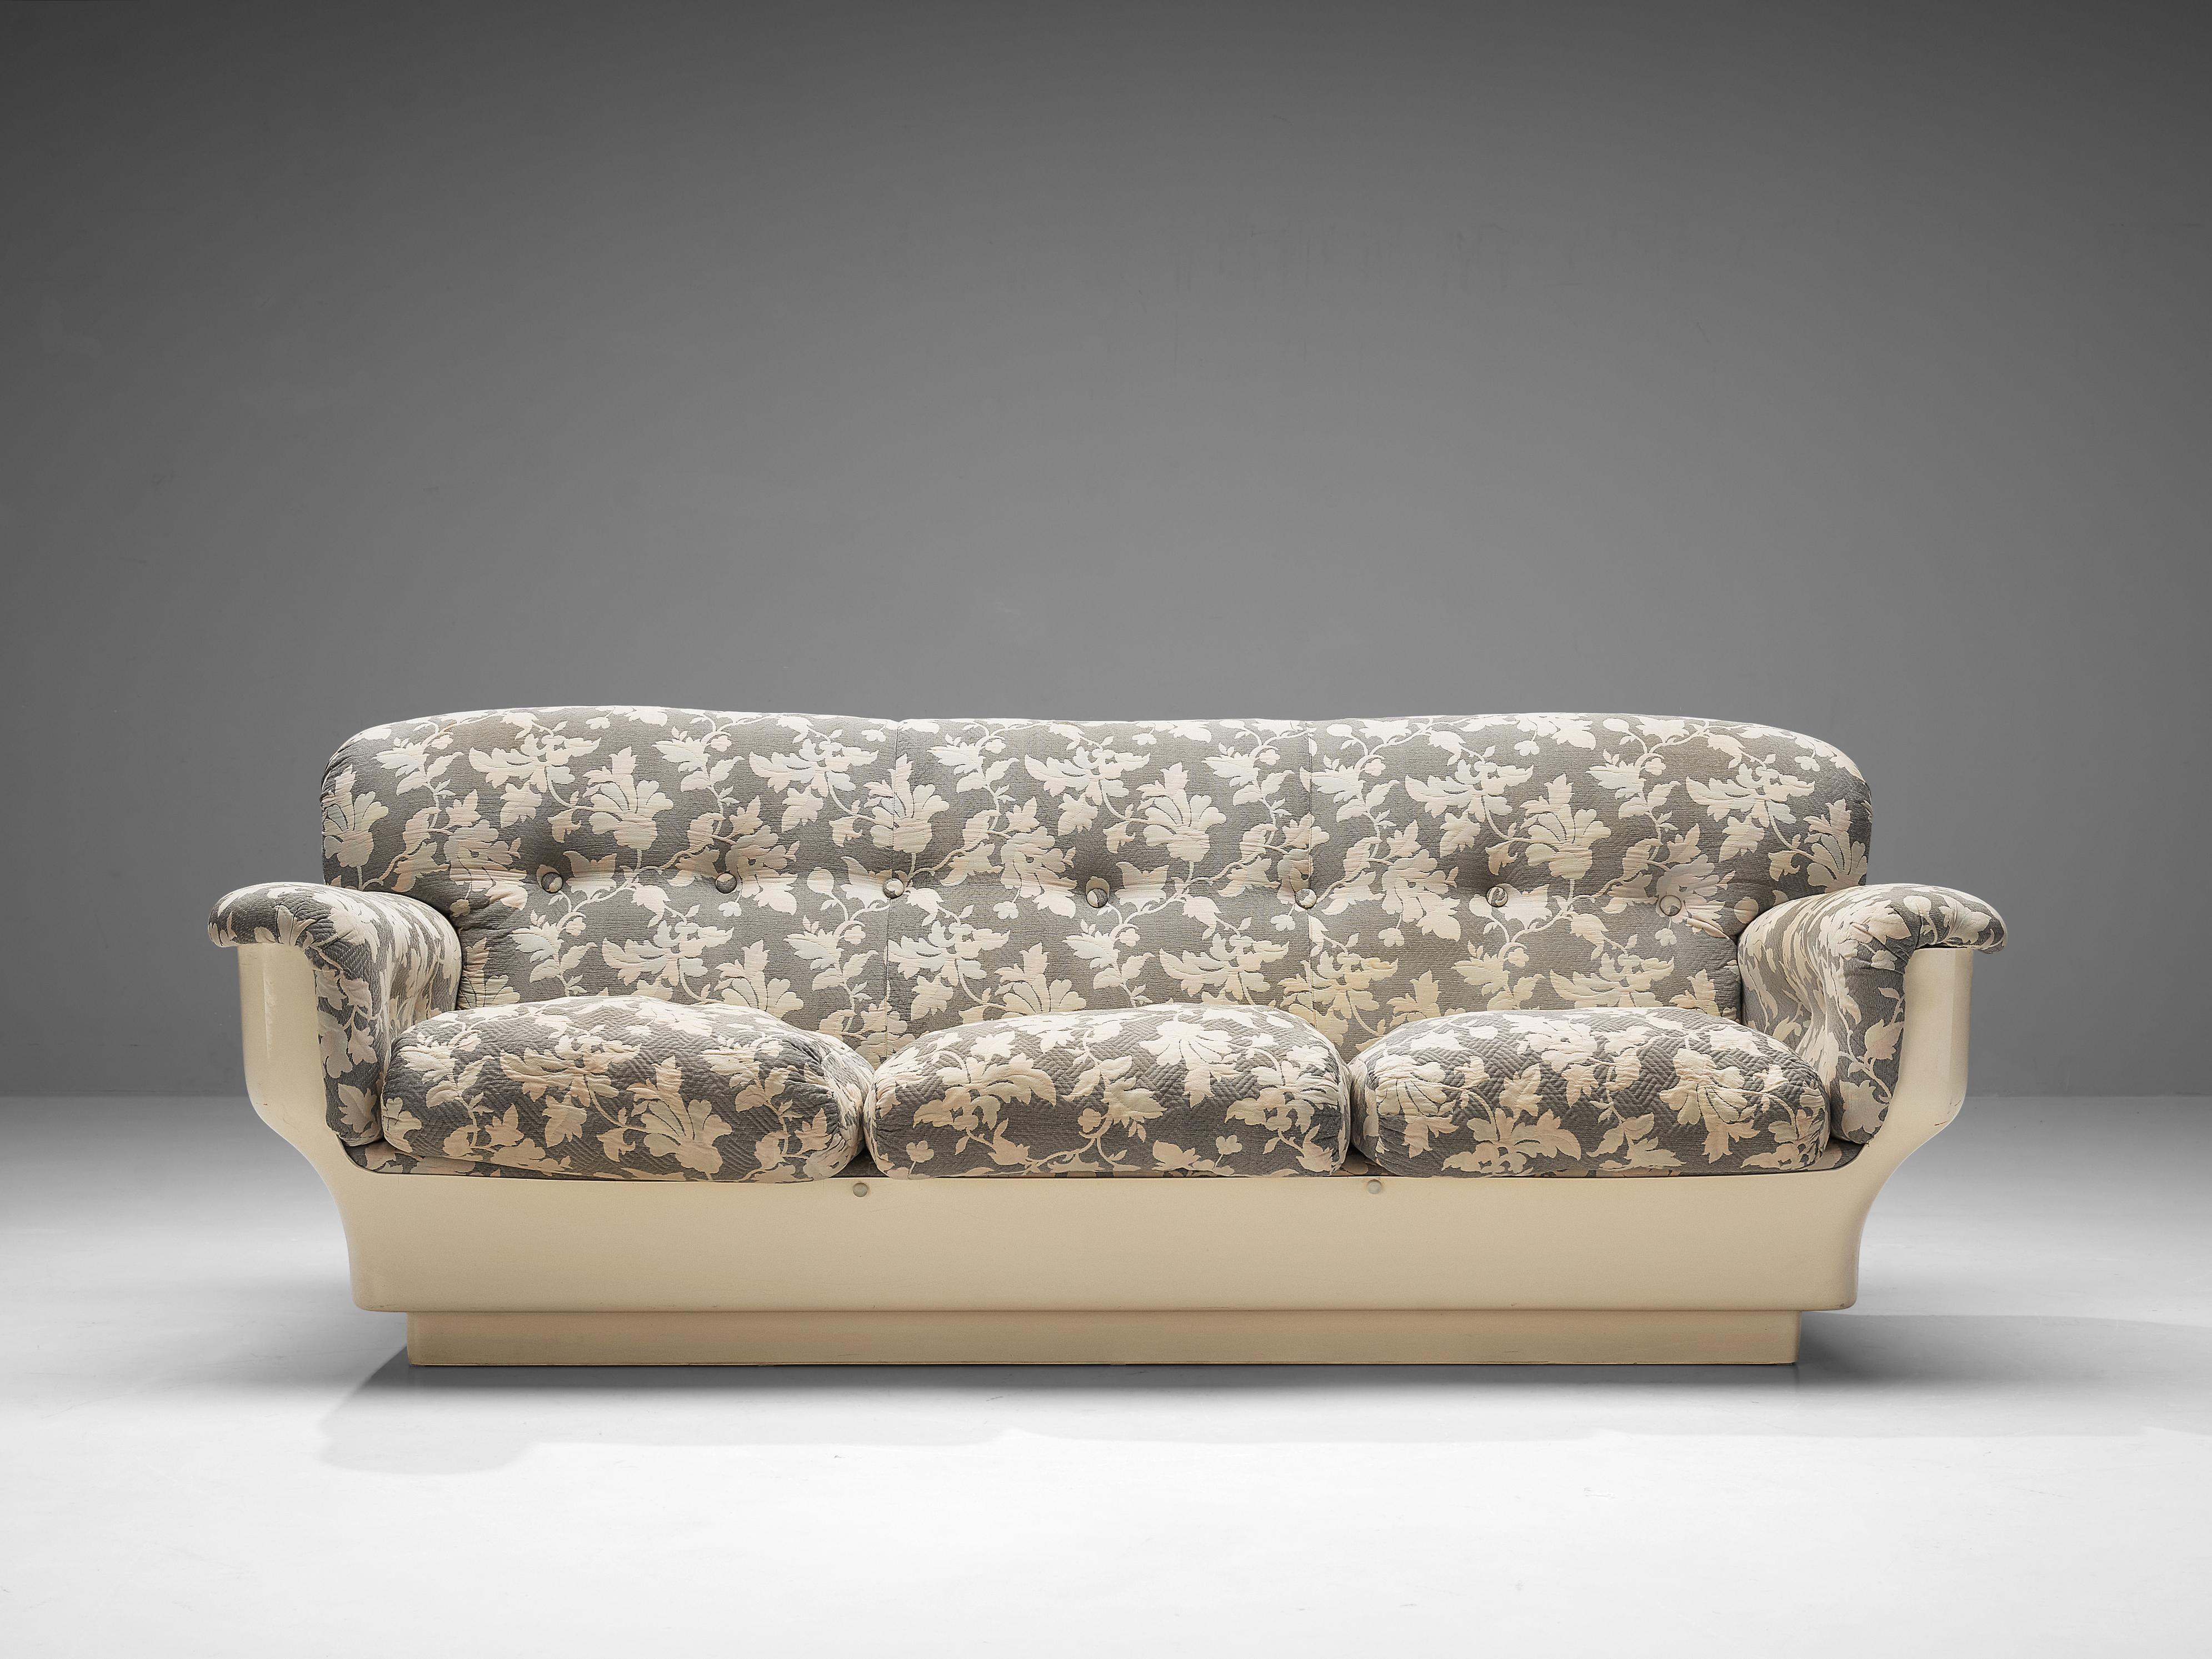 Studio Tecnico for Mobilquattro, ‘Delta 699’ sofa, fabric, fiberglass, Italy, 1970s

The 'Delta 699' sofa, a product of the collaborative efforts between Studio Tecnico and G.G. Biemme for Mobilquattro, is a distinctive example of postmodern